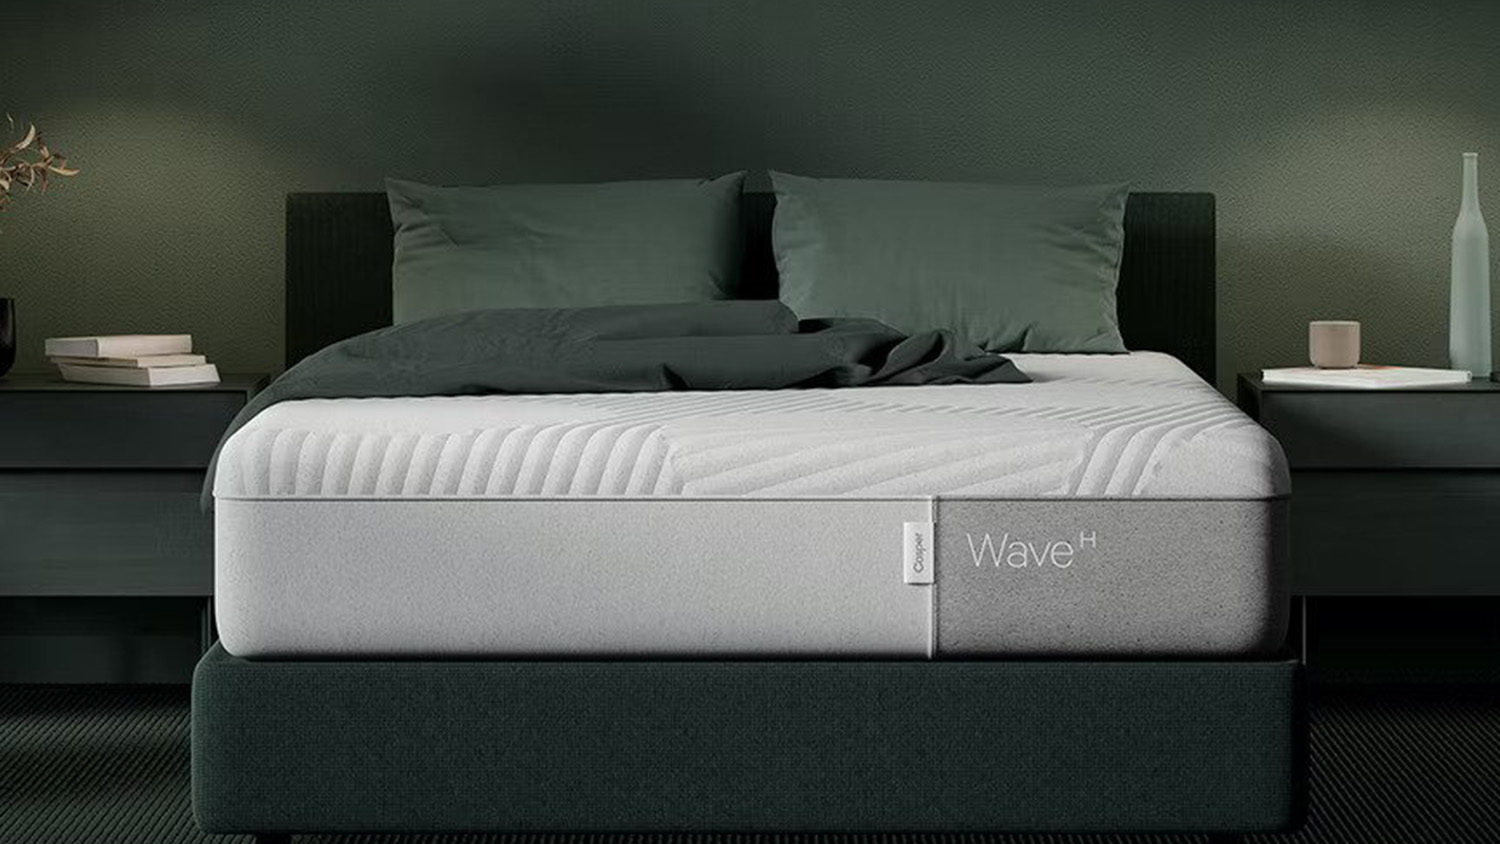 Casper mattress sales, deals and discounts: the Casper Wave Hybrid Mattress shown on a black fabric bed frame in a dark green bedroom